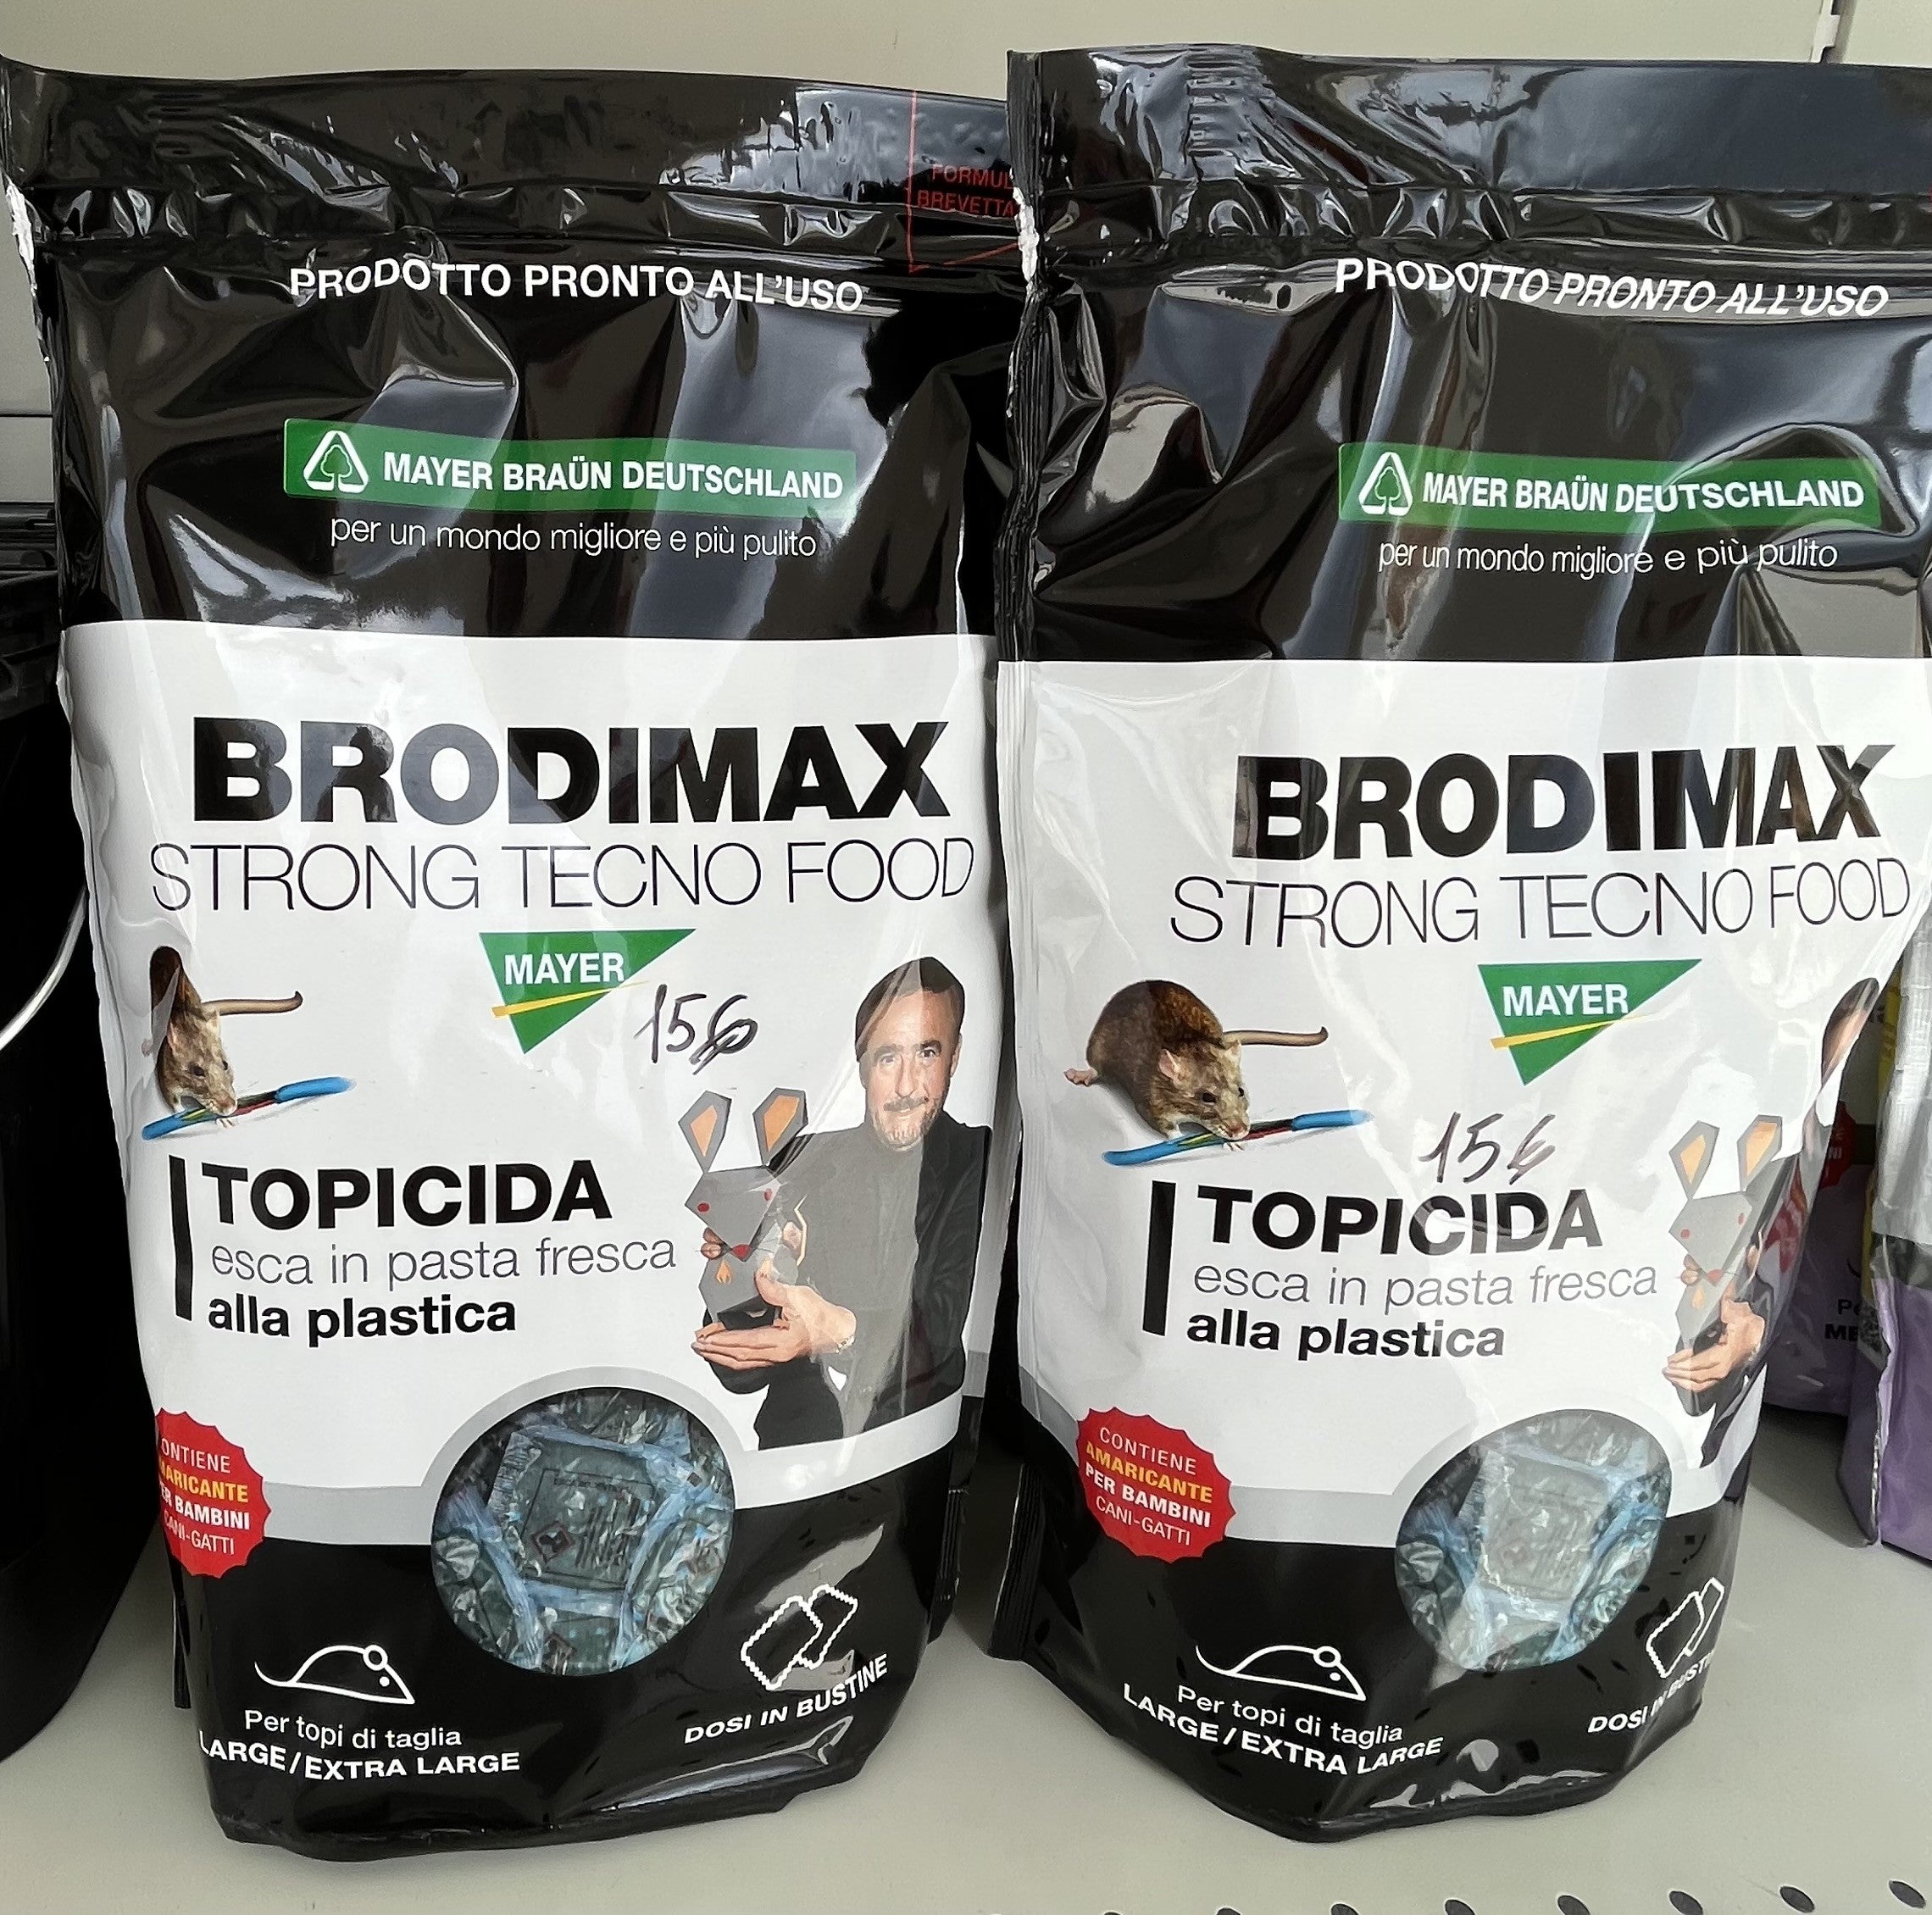 Topicida x 1,5 Kg - Brodimax - Strong - Tecno - Food - Mayer - Esca - Pasta - Fresca